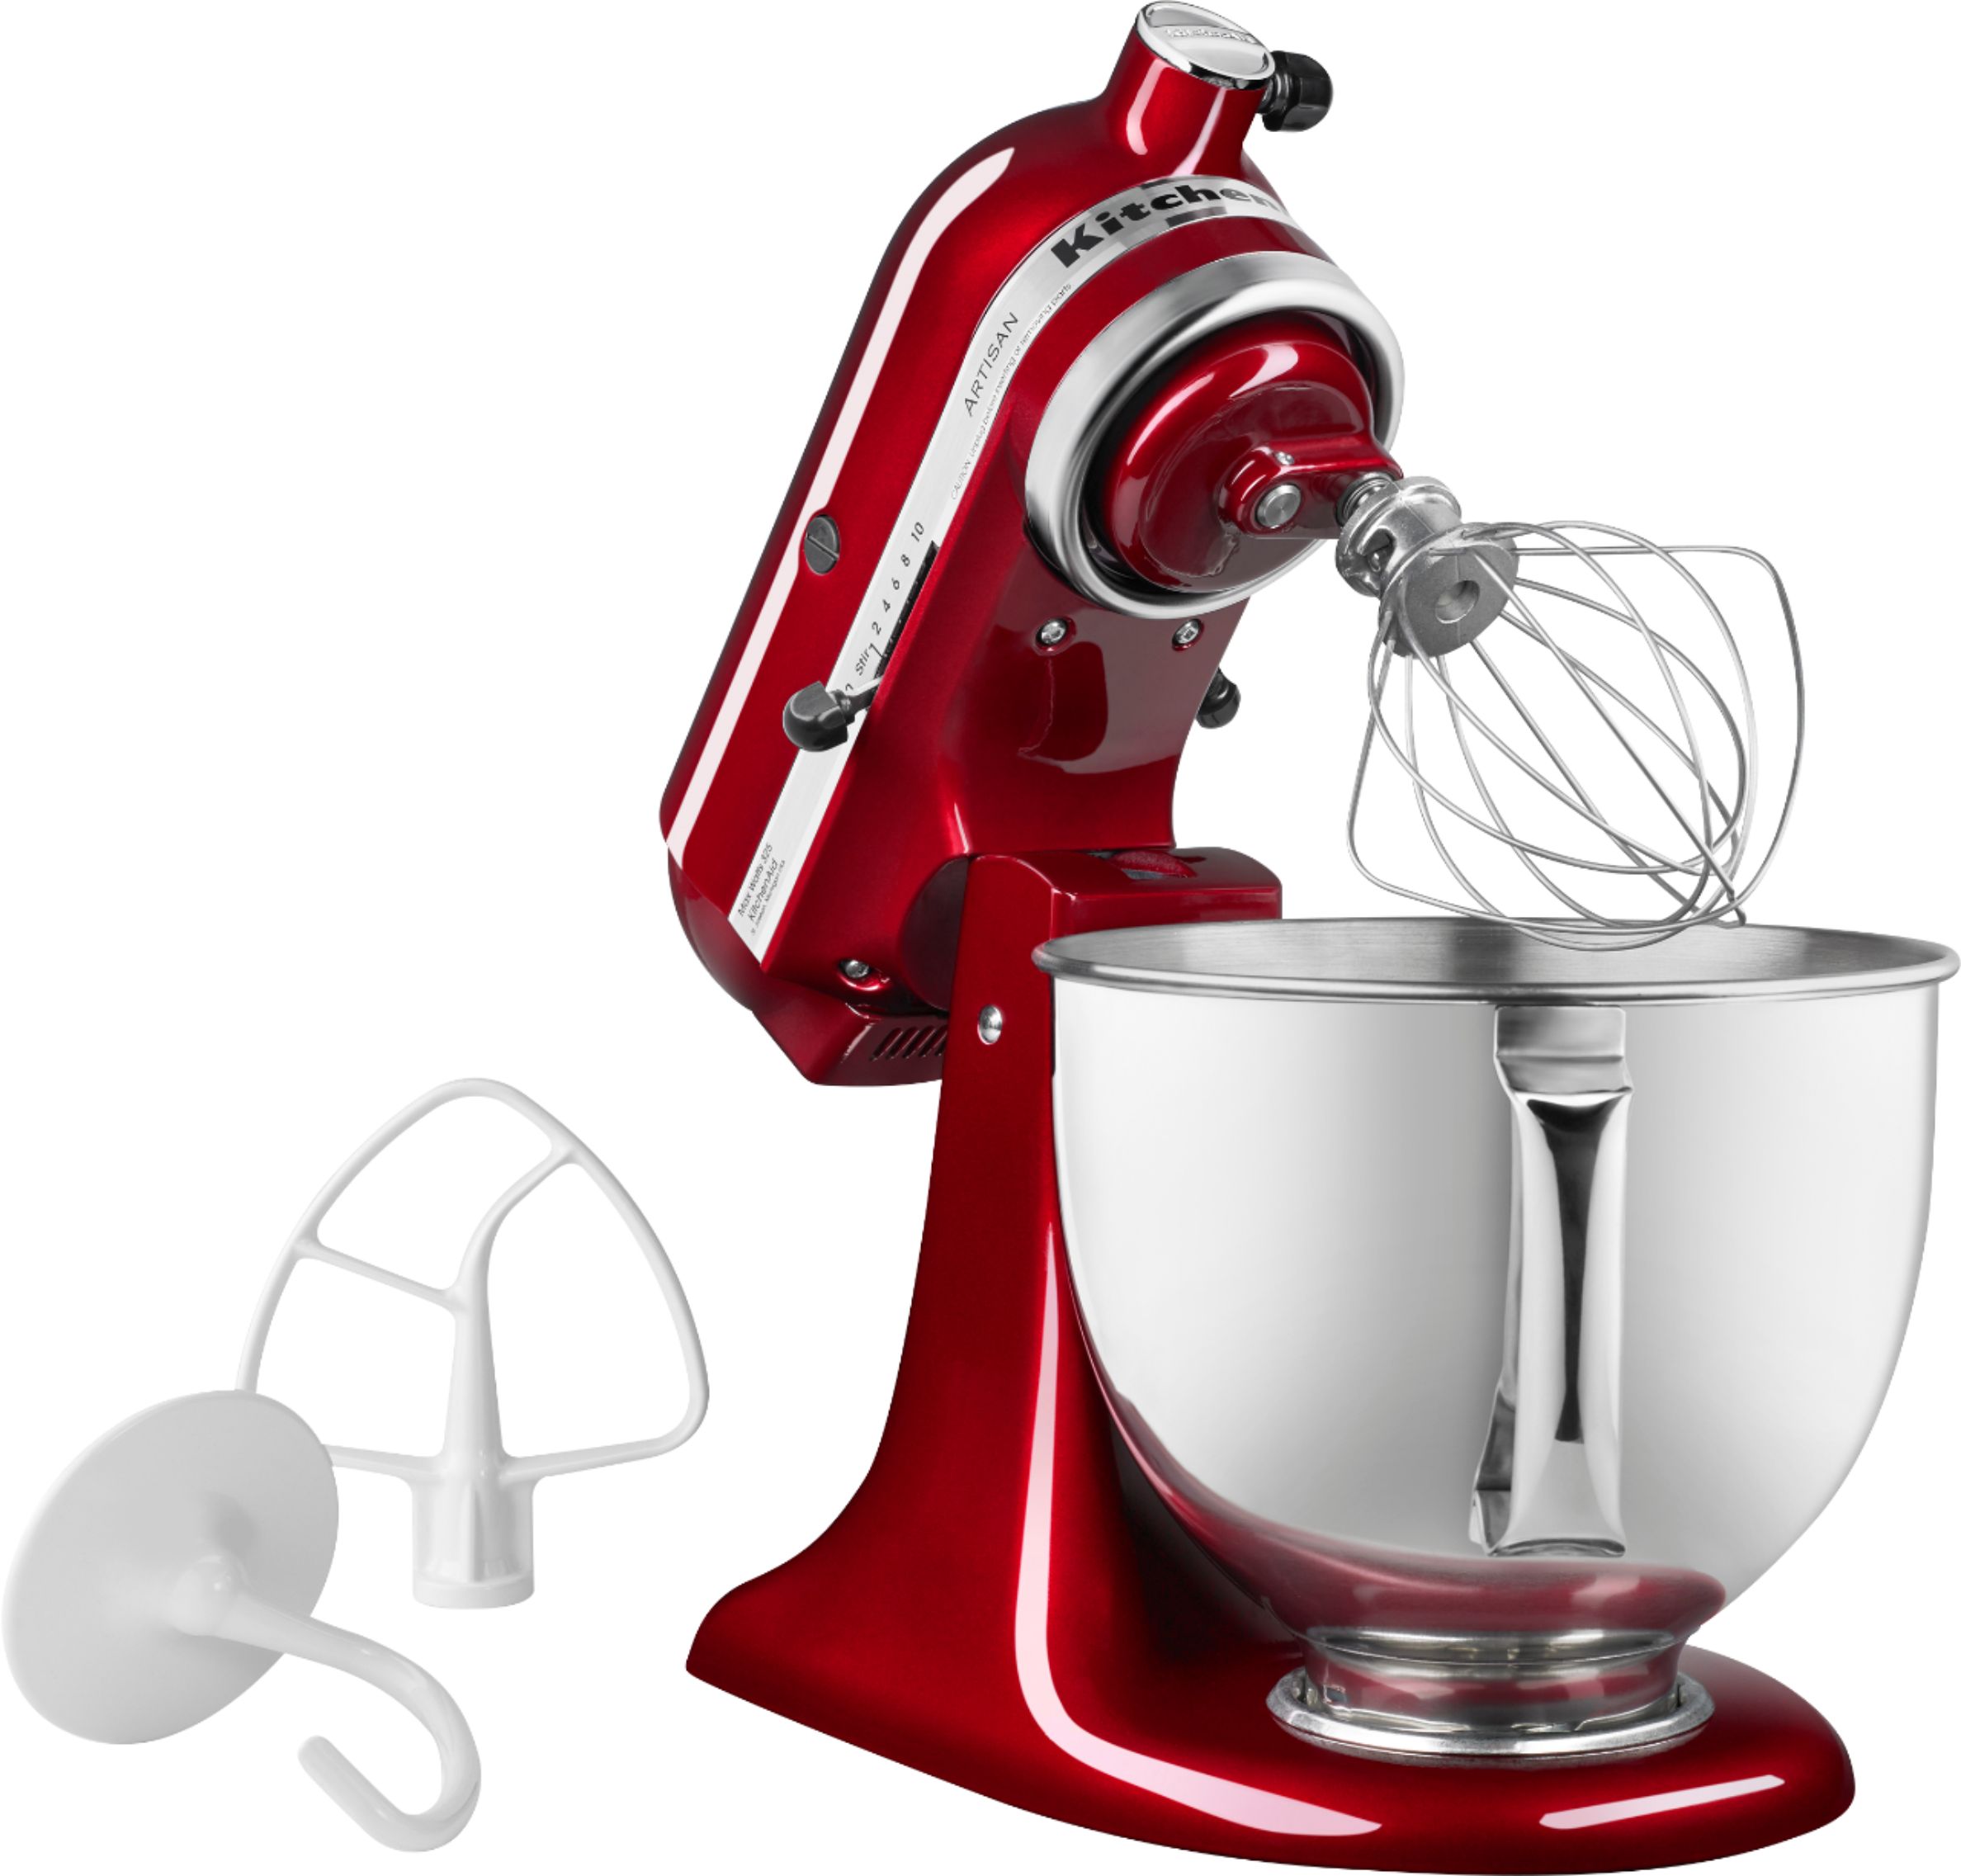 KitchenAid KSM150PSER Artisan Tilt-Head Stand Mixer with Pouring